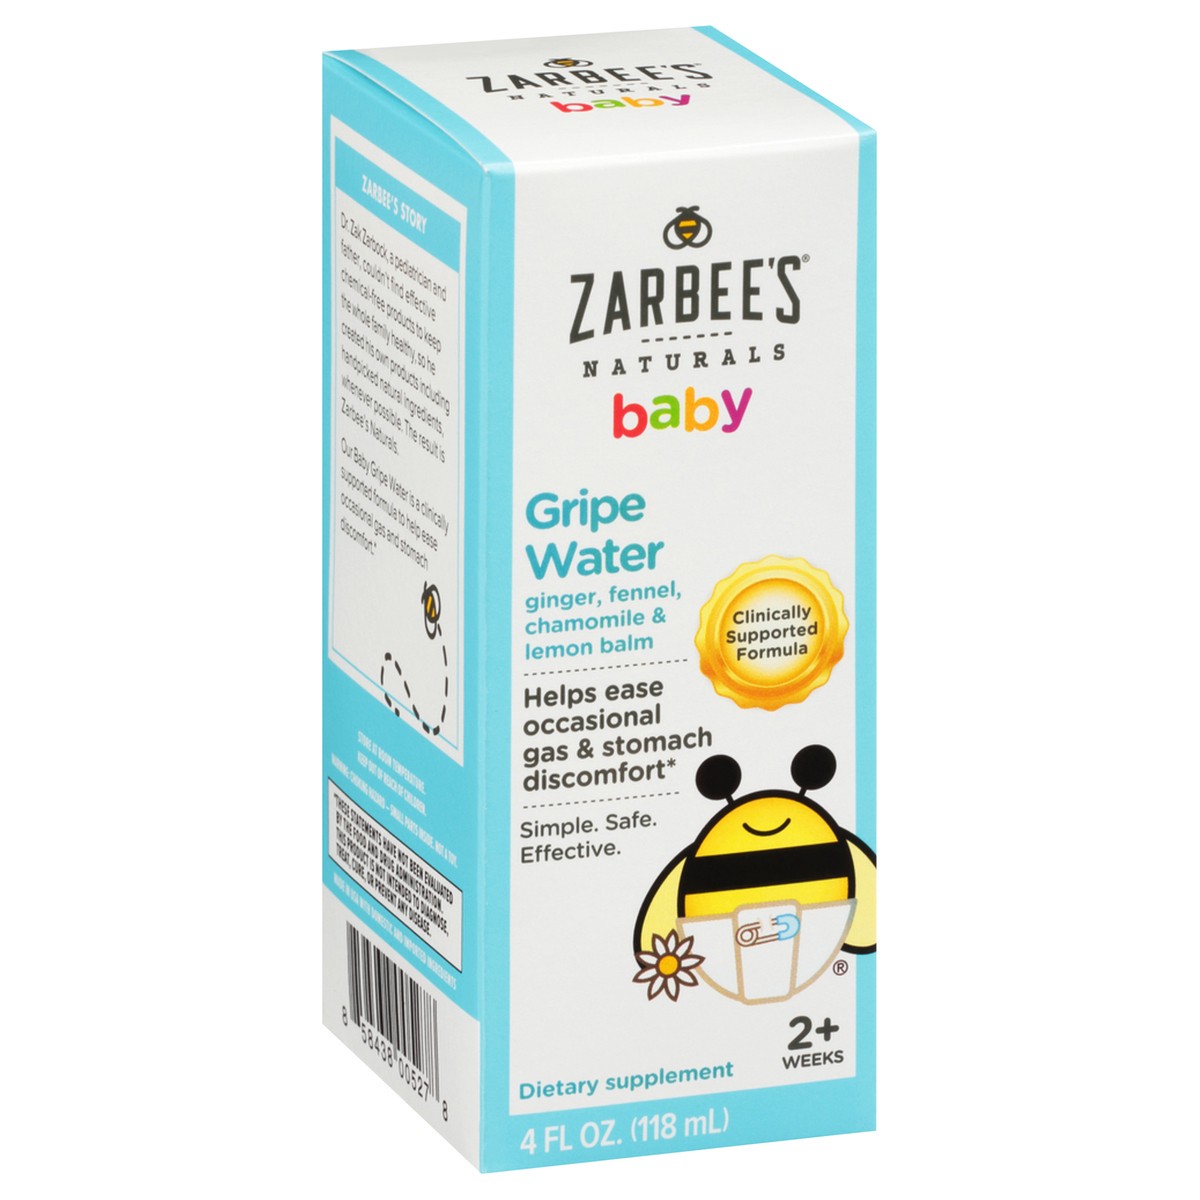 slide 6 of 11, Zarbee's Naturals Naturals Baby Gripe Water 4 oz Box, 4 fl oz